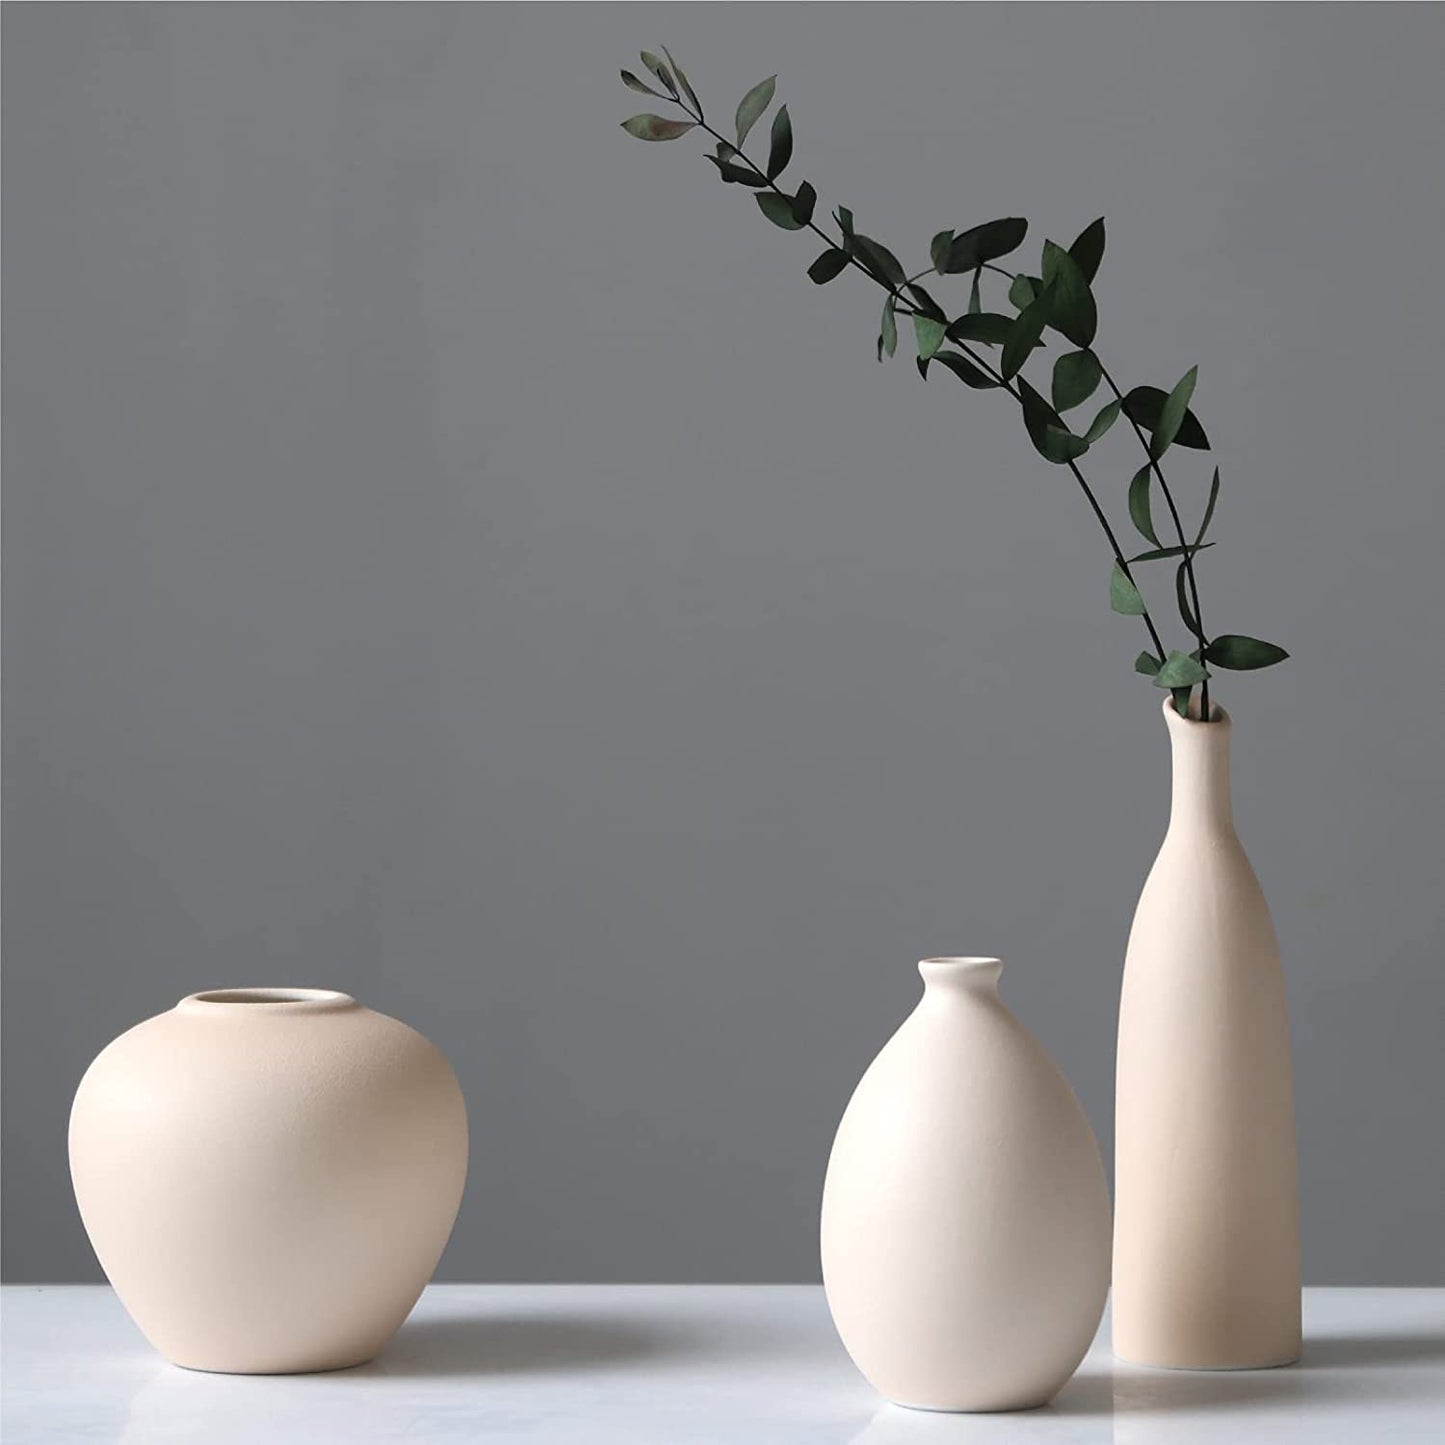 Ceramic Vase Set of 3, Flower Vase Minimalism Style for Rustic Home Decor, Modern Farmhouse Decor, Living Room Decor, Shelf Decor, Table Decor, Bookshelf, Mantel and Entryway Decor - Beige